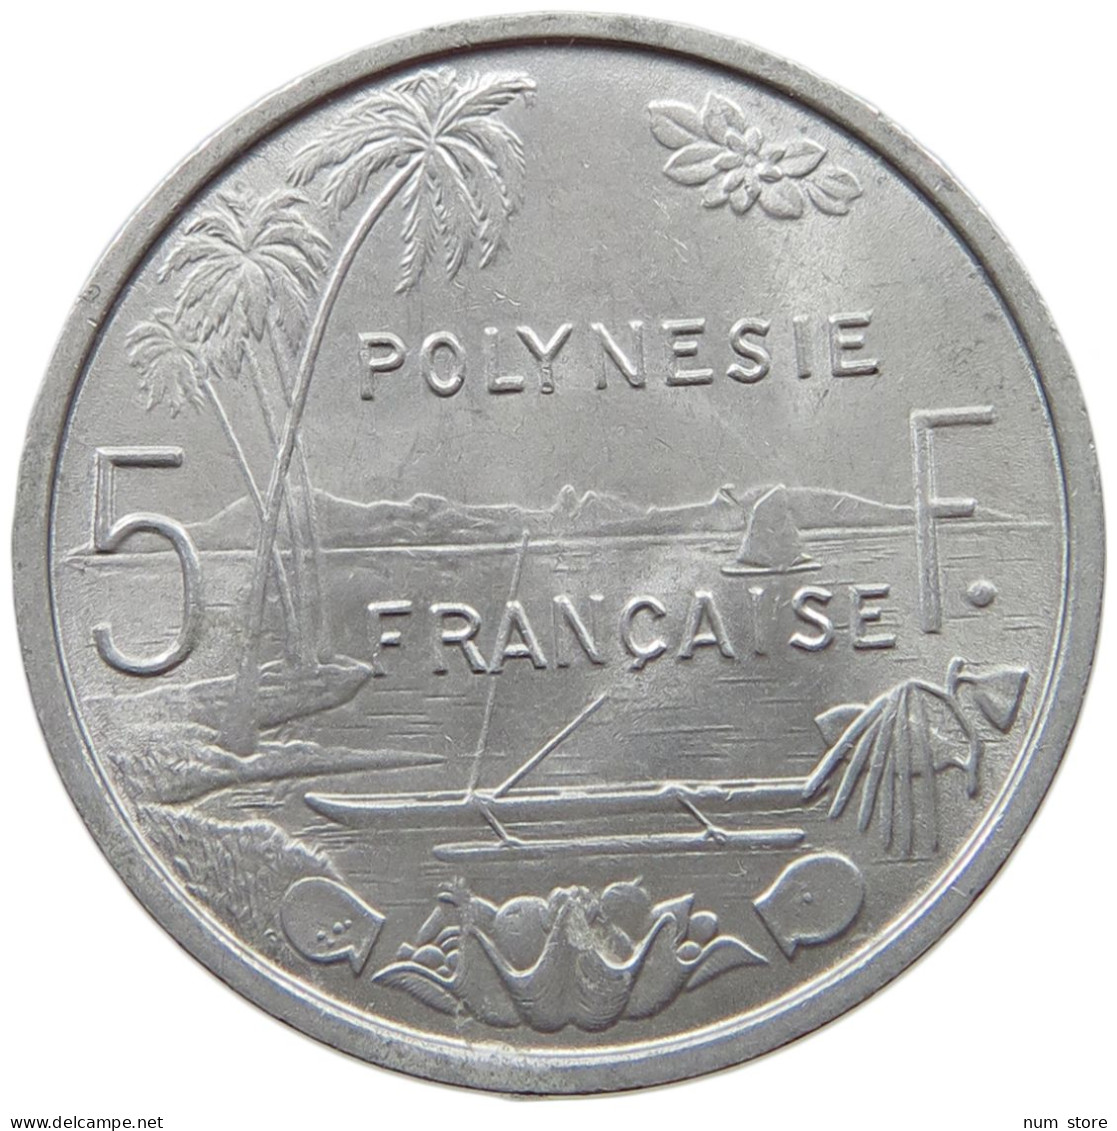 POLYNESIA 5 FRANCS 1975  #a021 1119 - Französisch-Polynesien